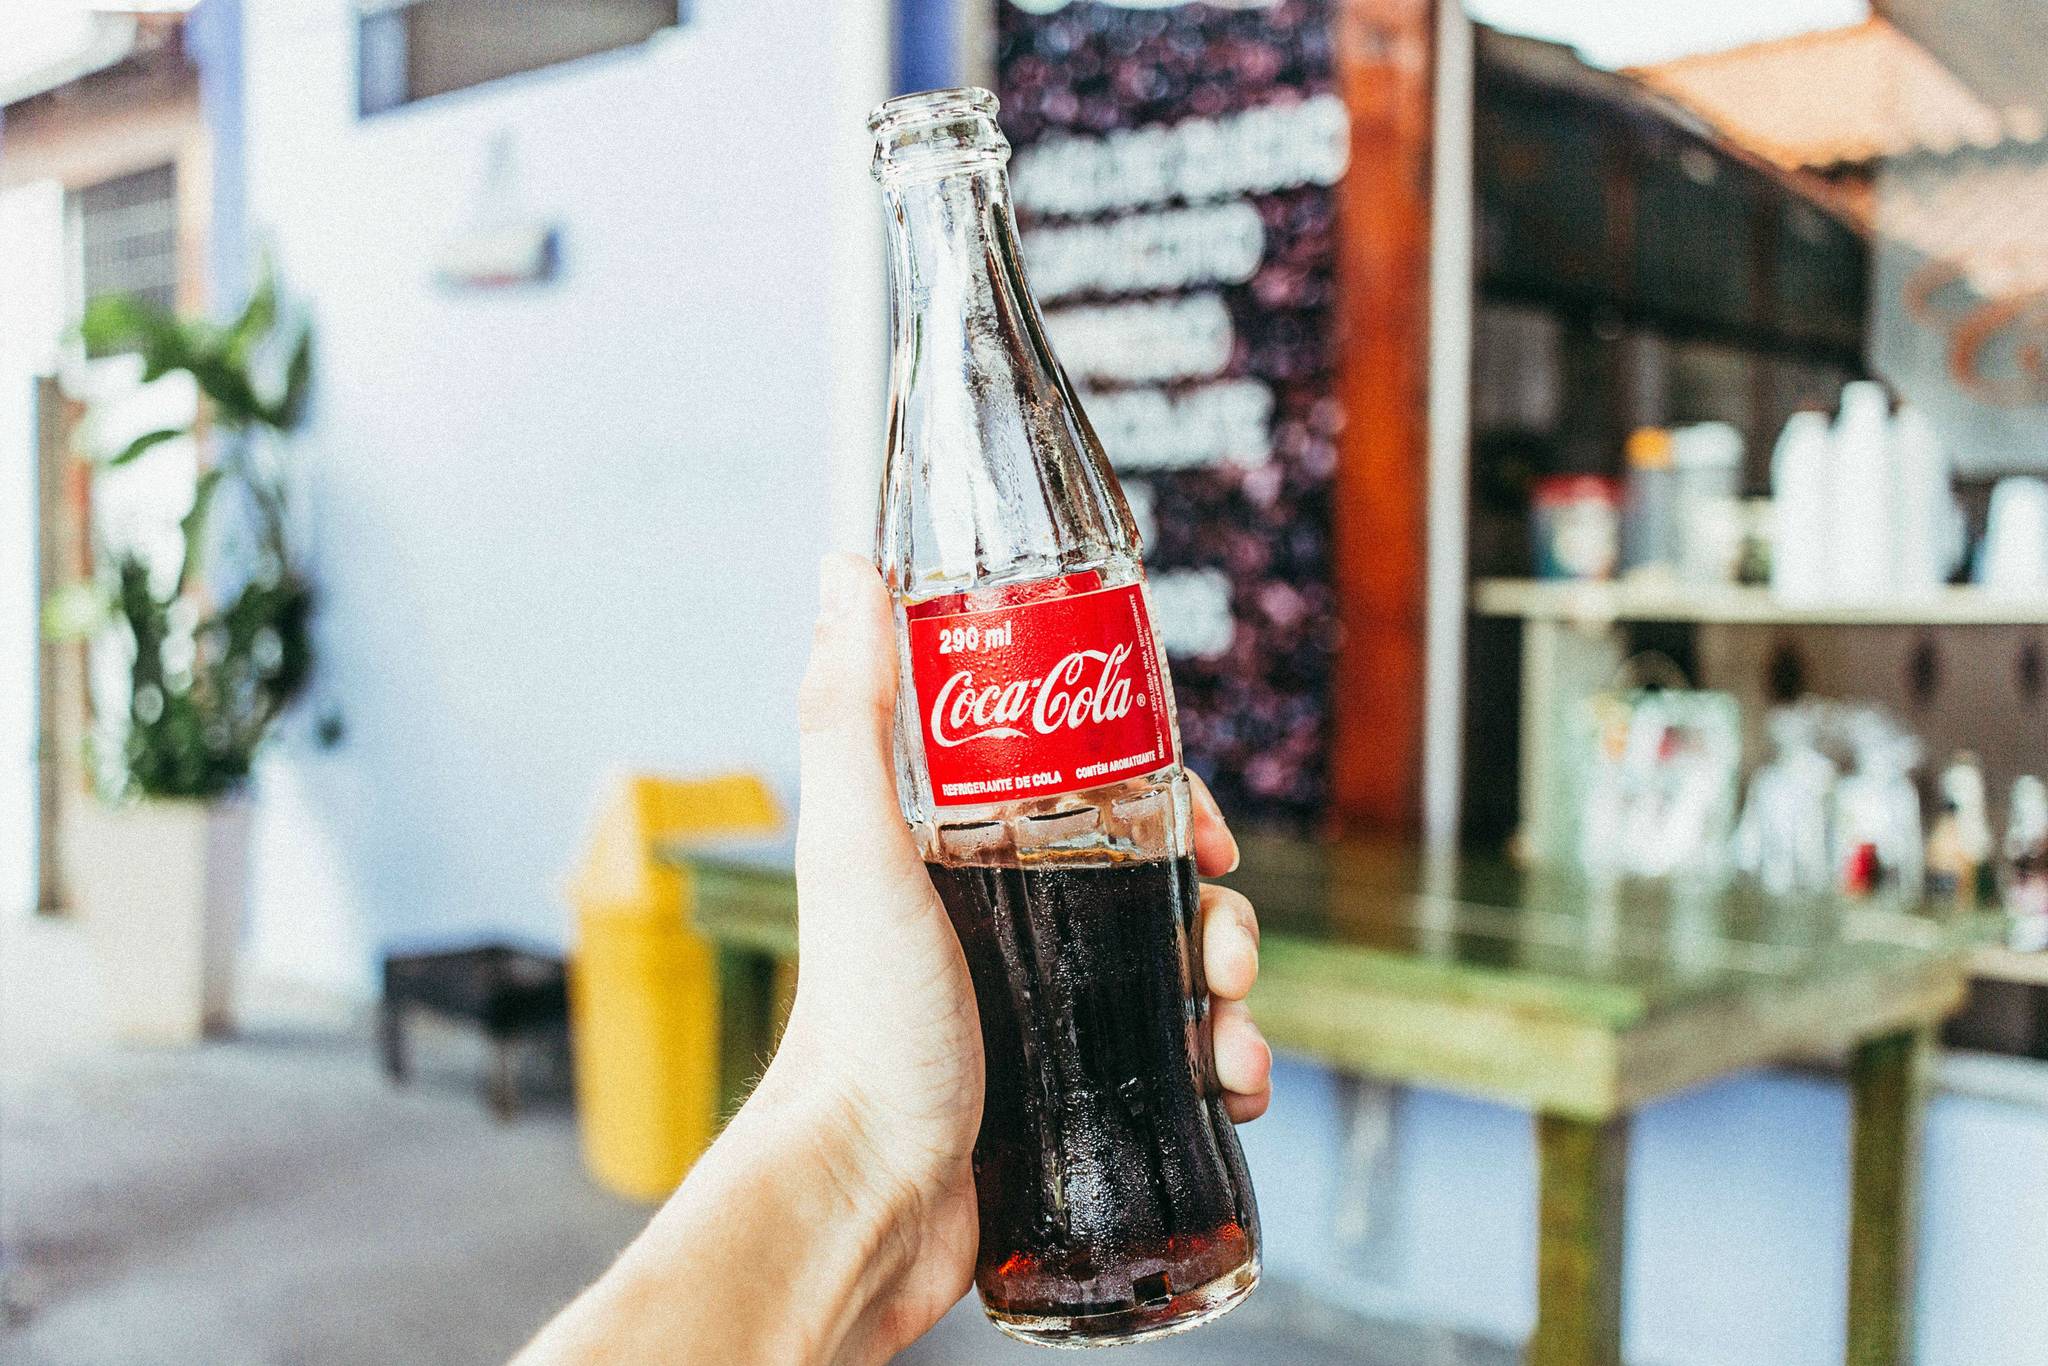 Coke's #Refreshthefeed demonstrates its core values